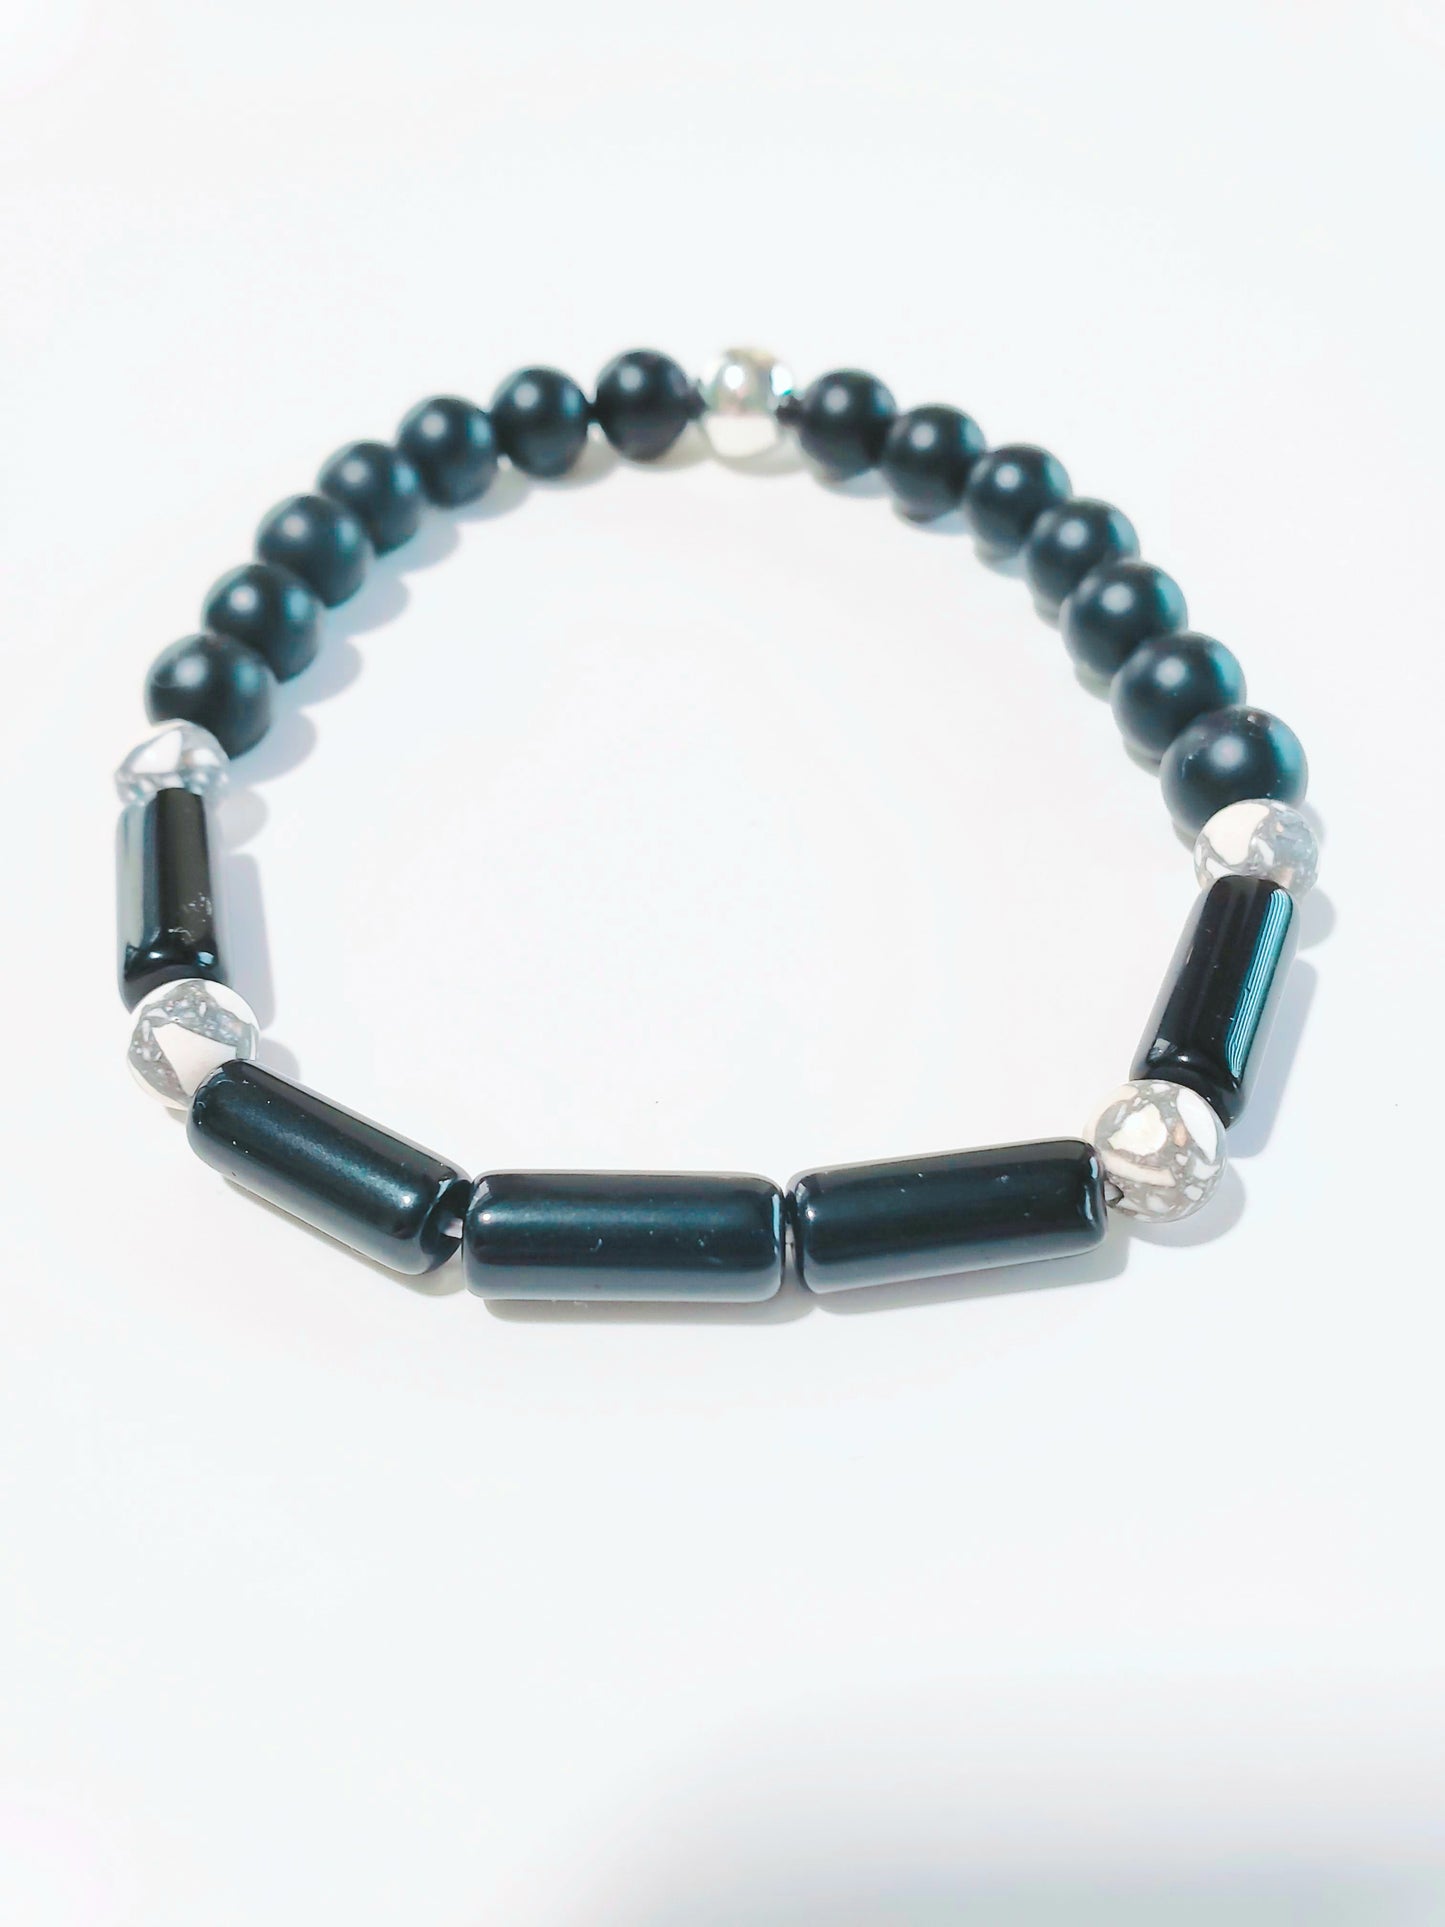 Men's Bracelet with Black obsidian